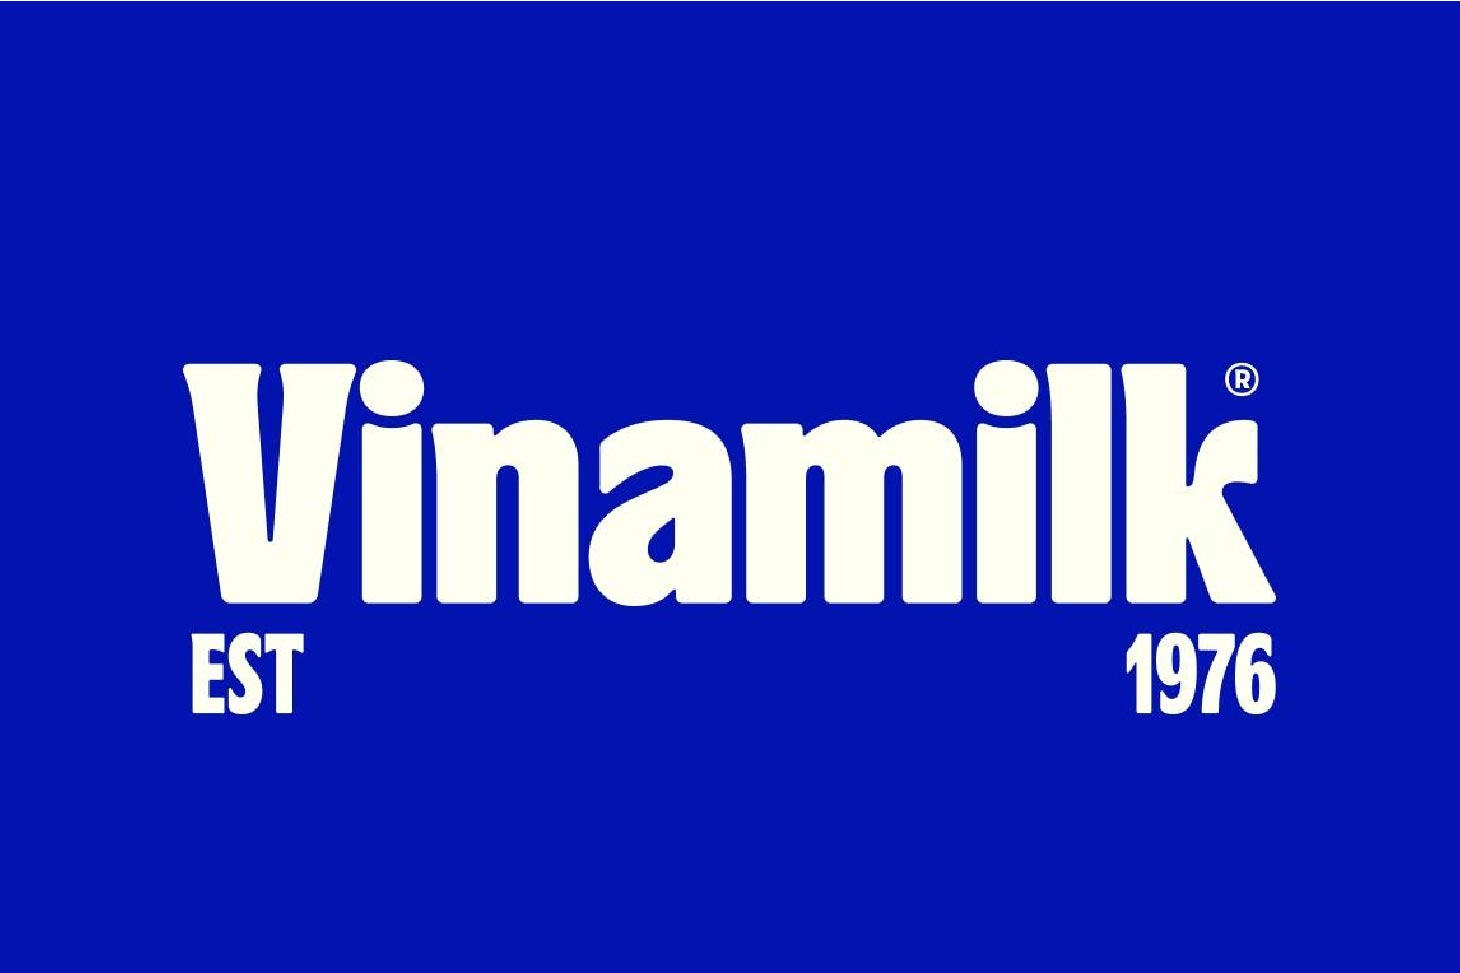 logo cửa hàng sữa